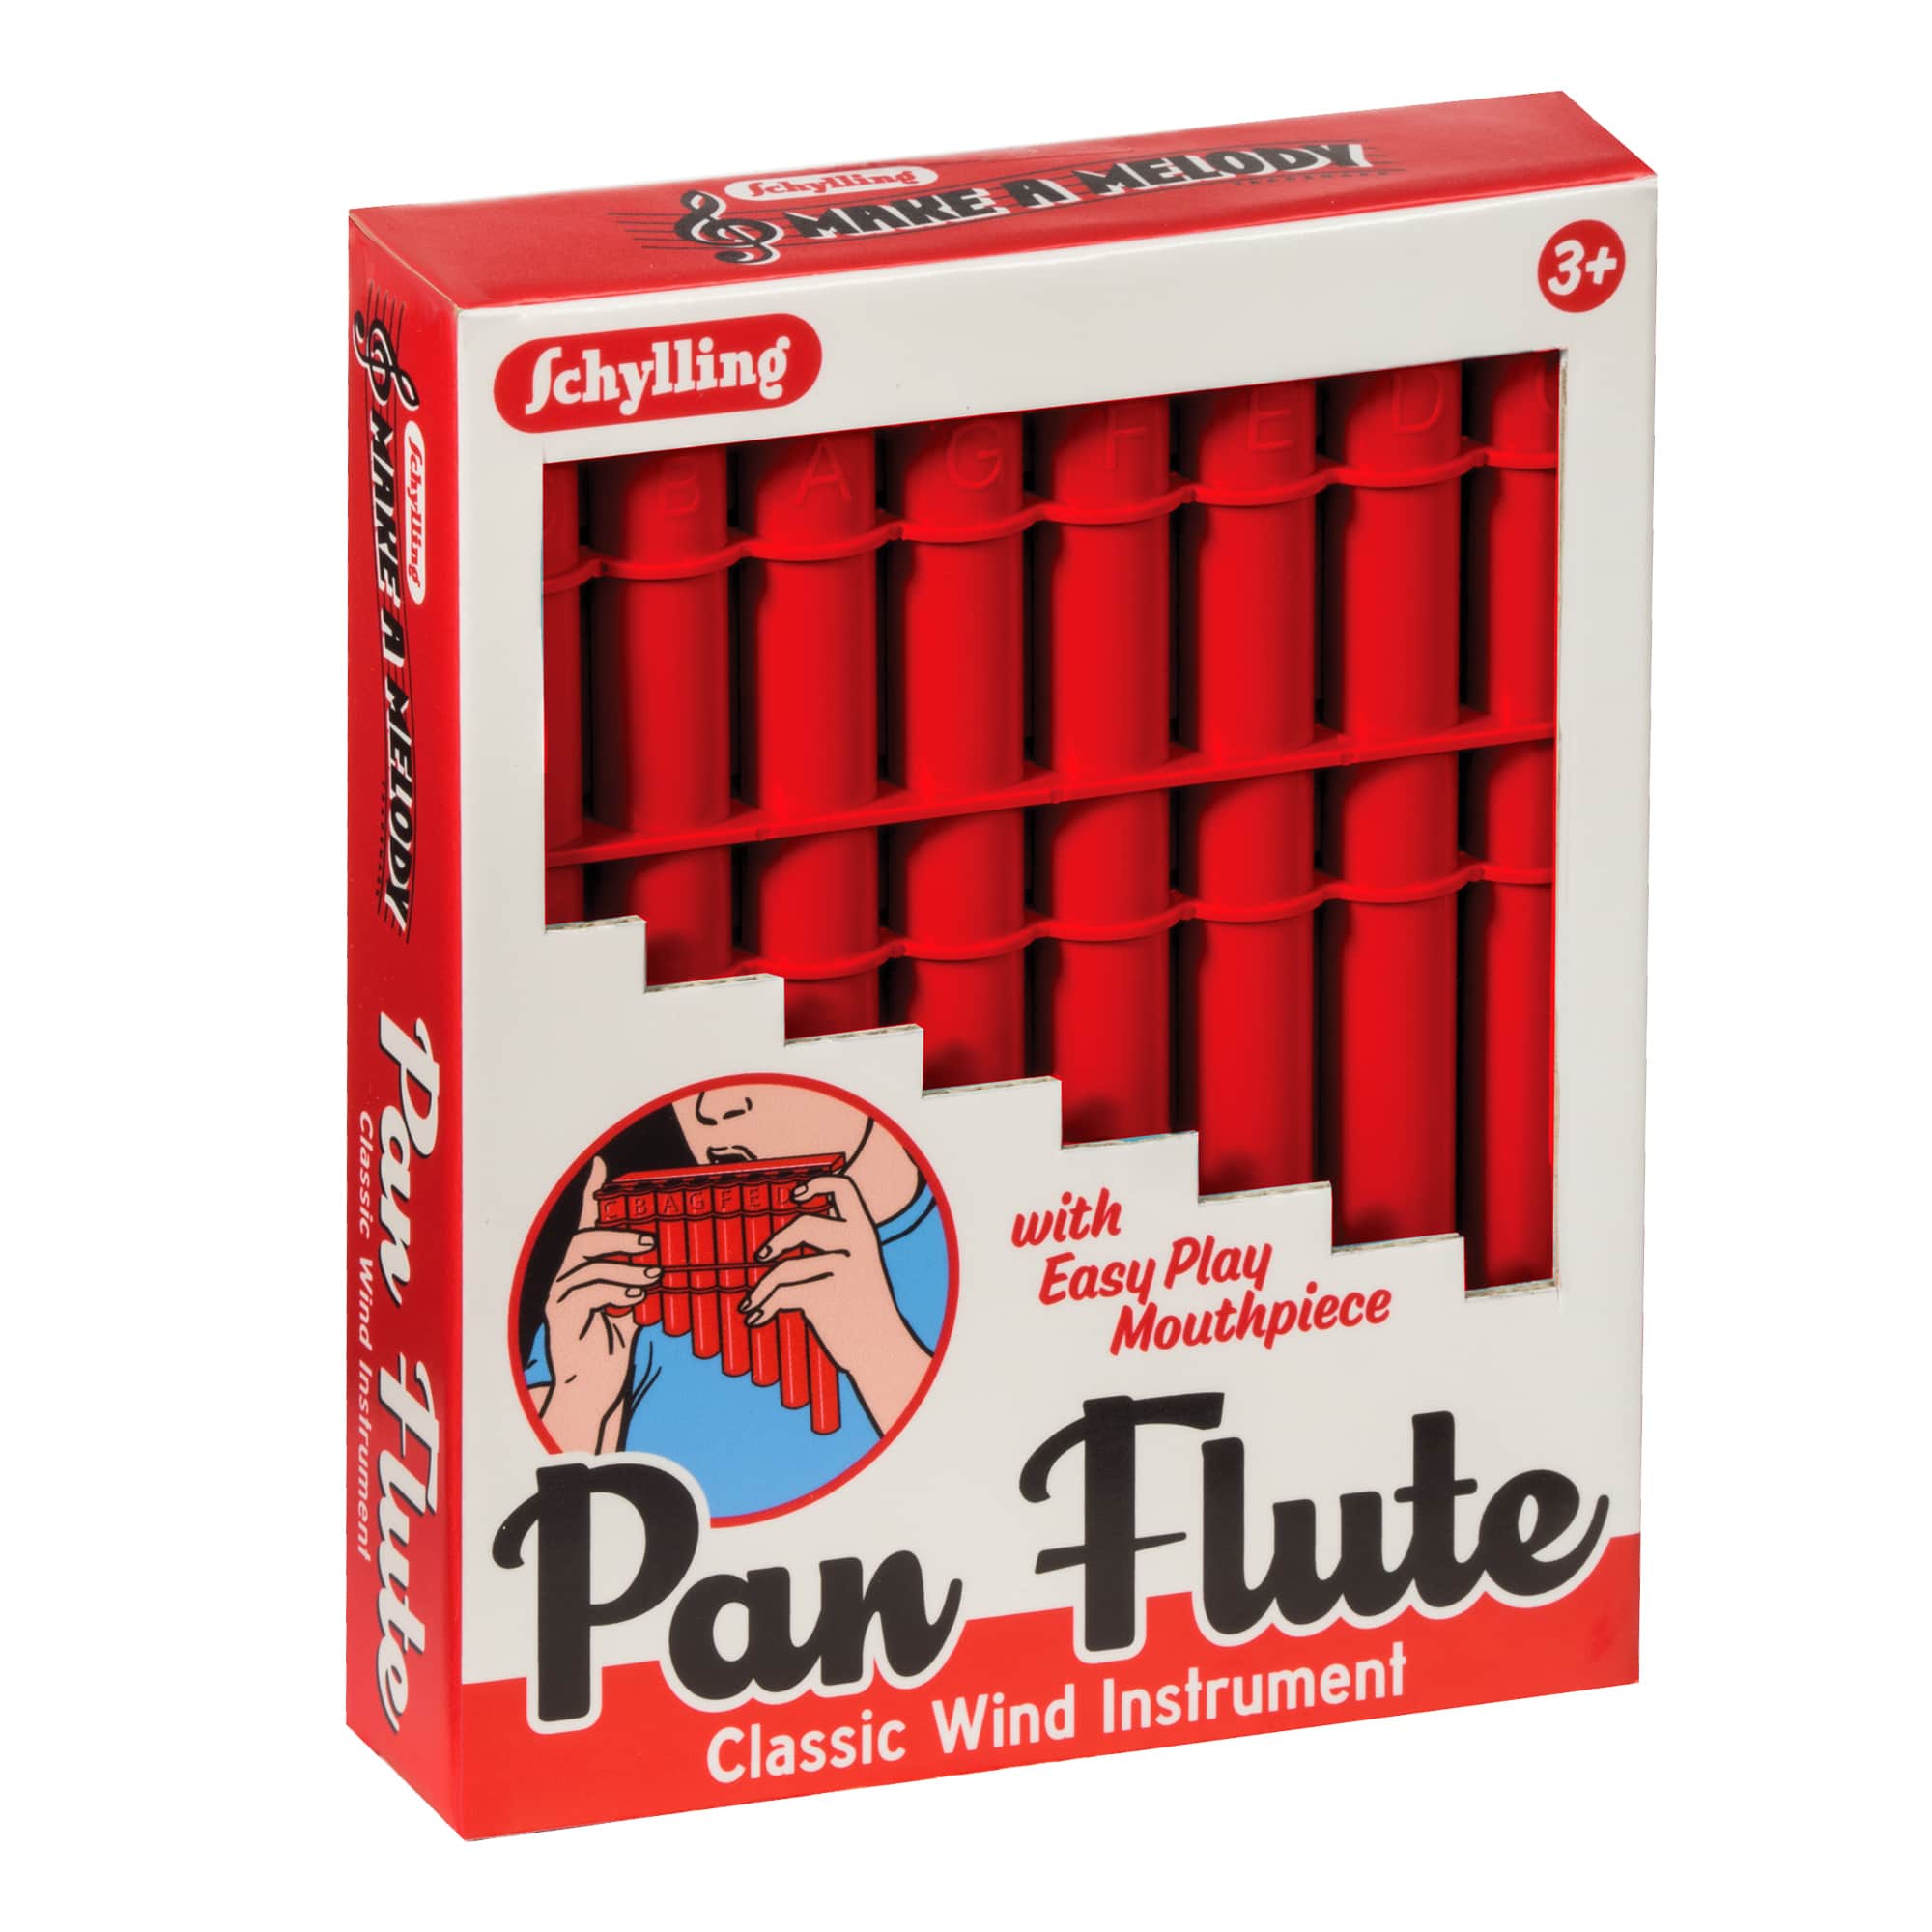 Pan Flute - Classic Wind Instrument    